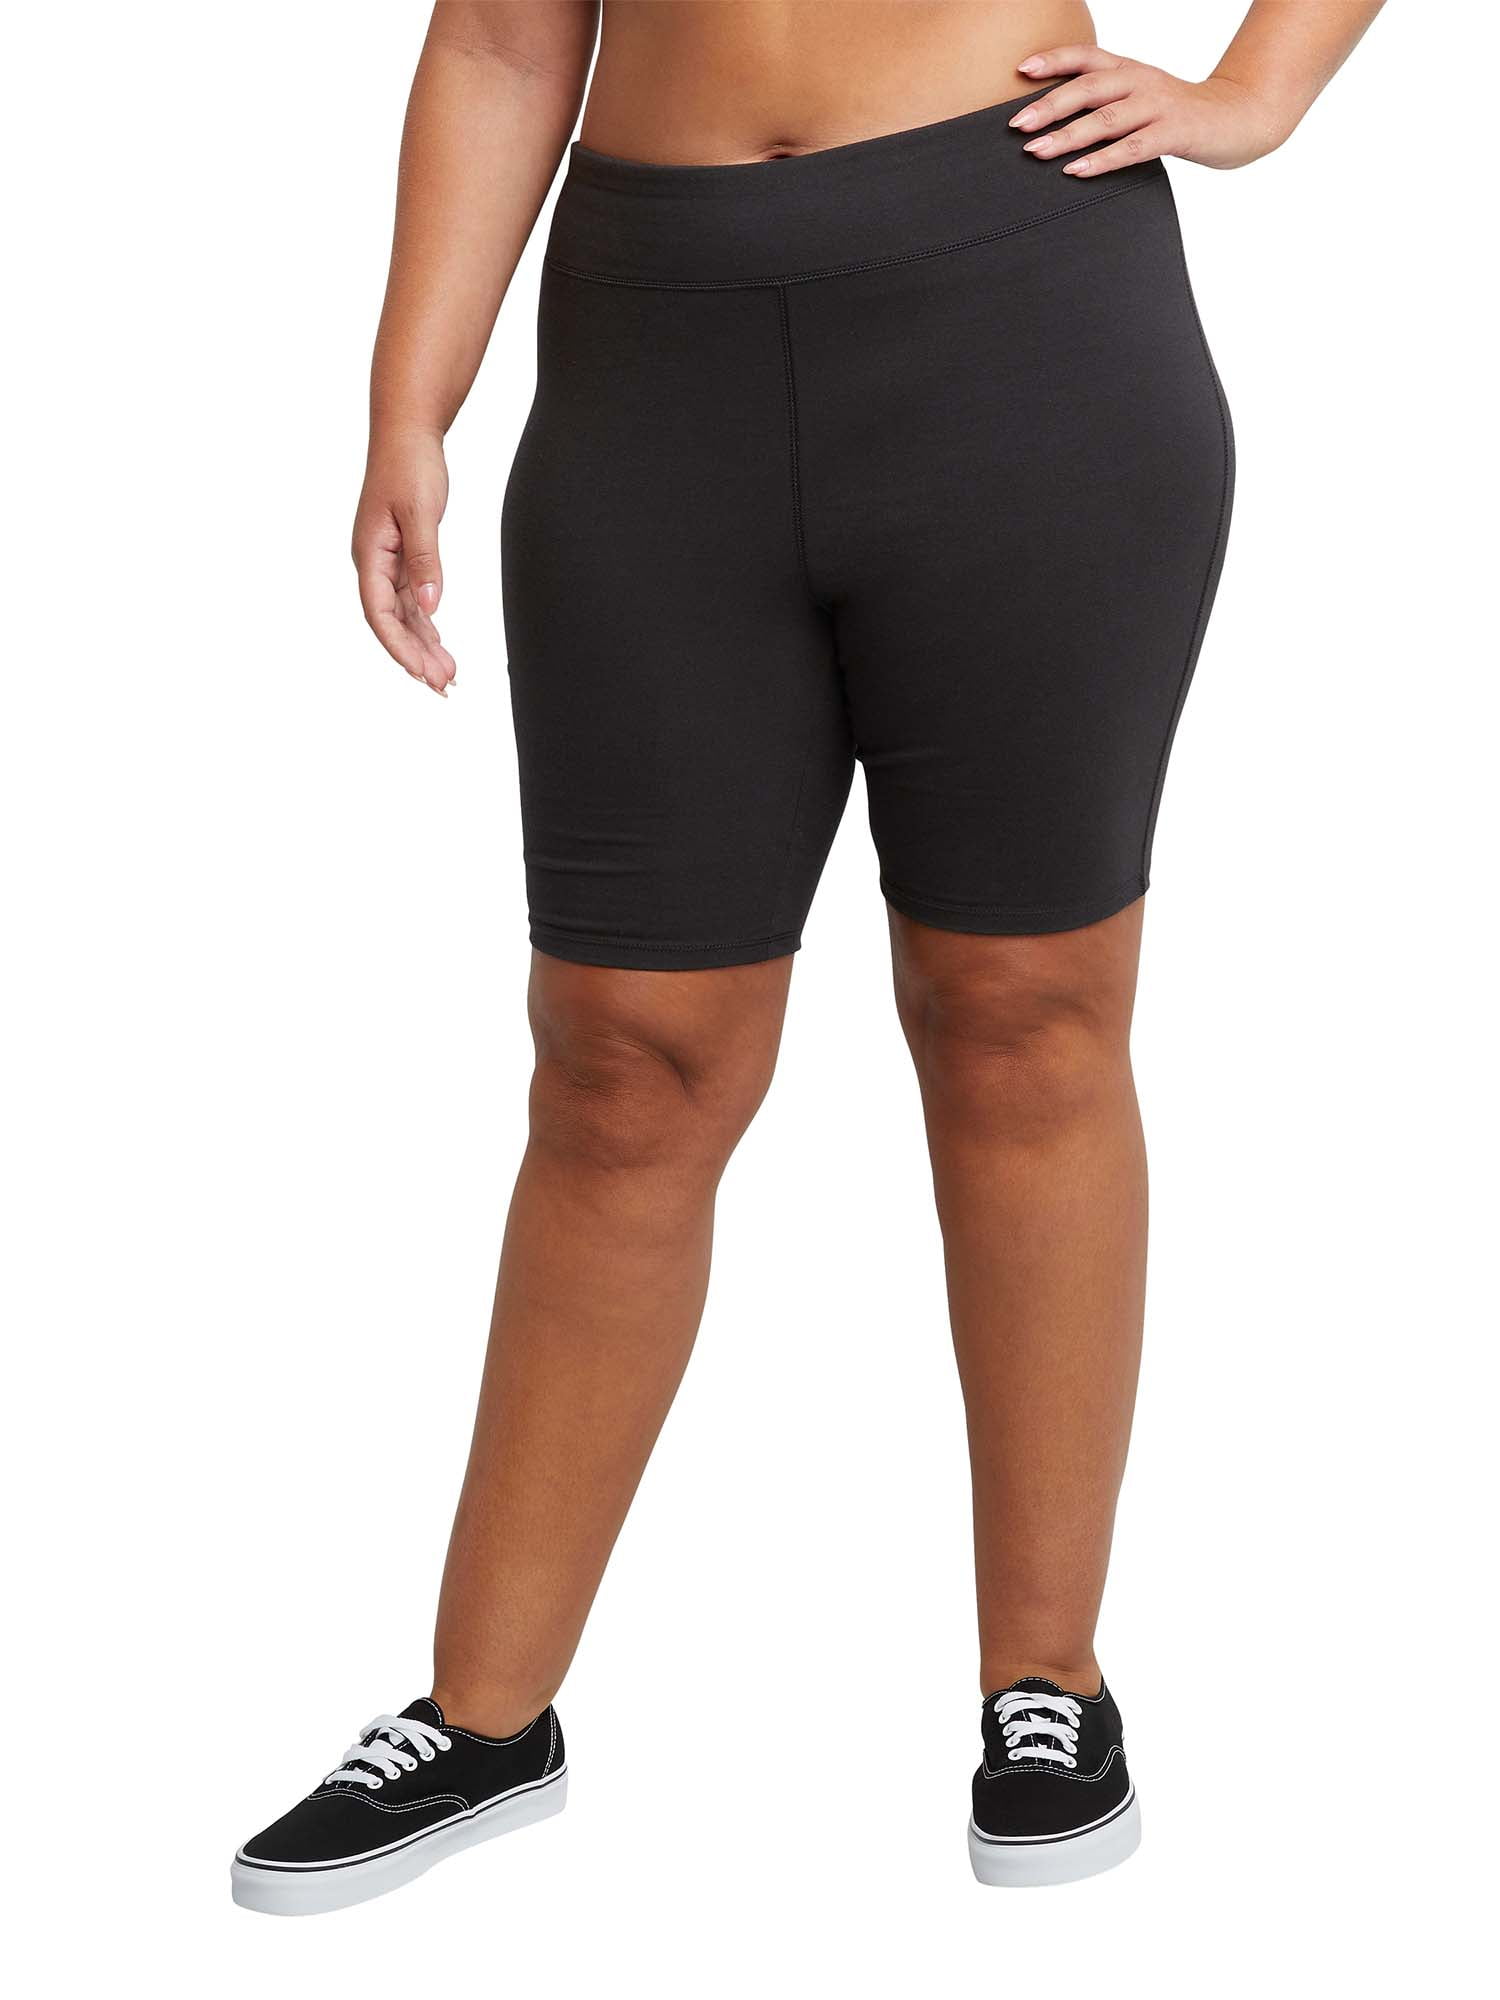 Plus Black Basic Bike Shorts, Plus Size